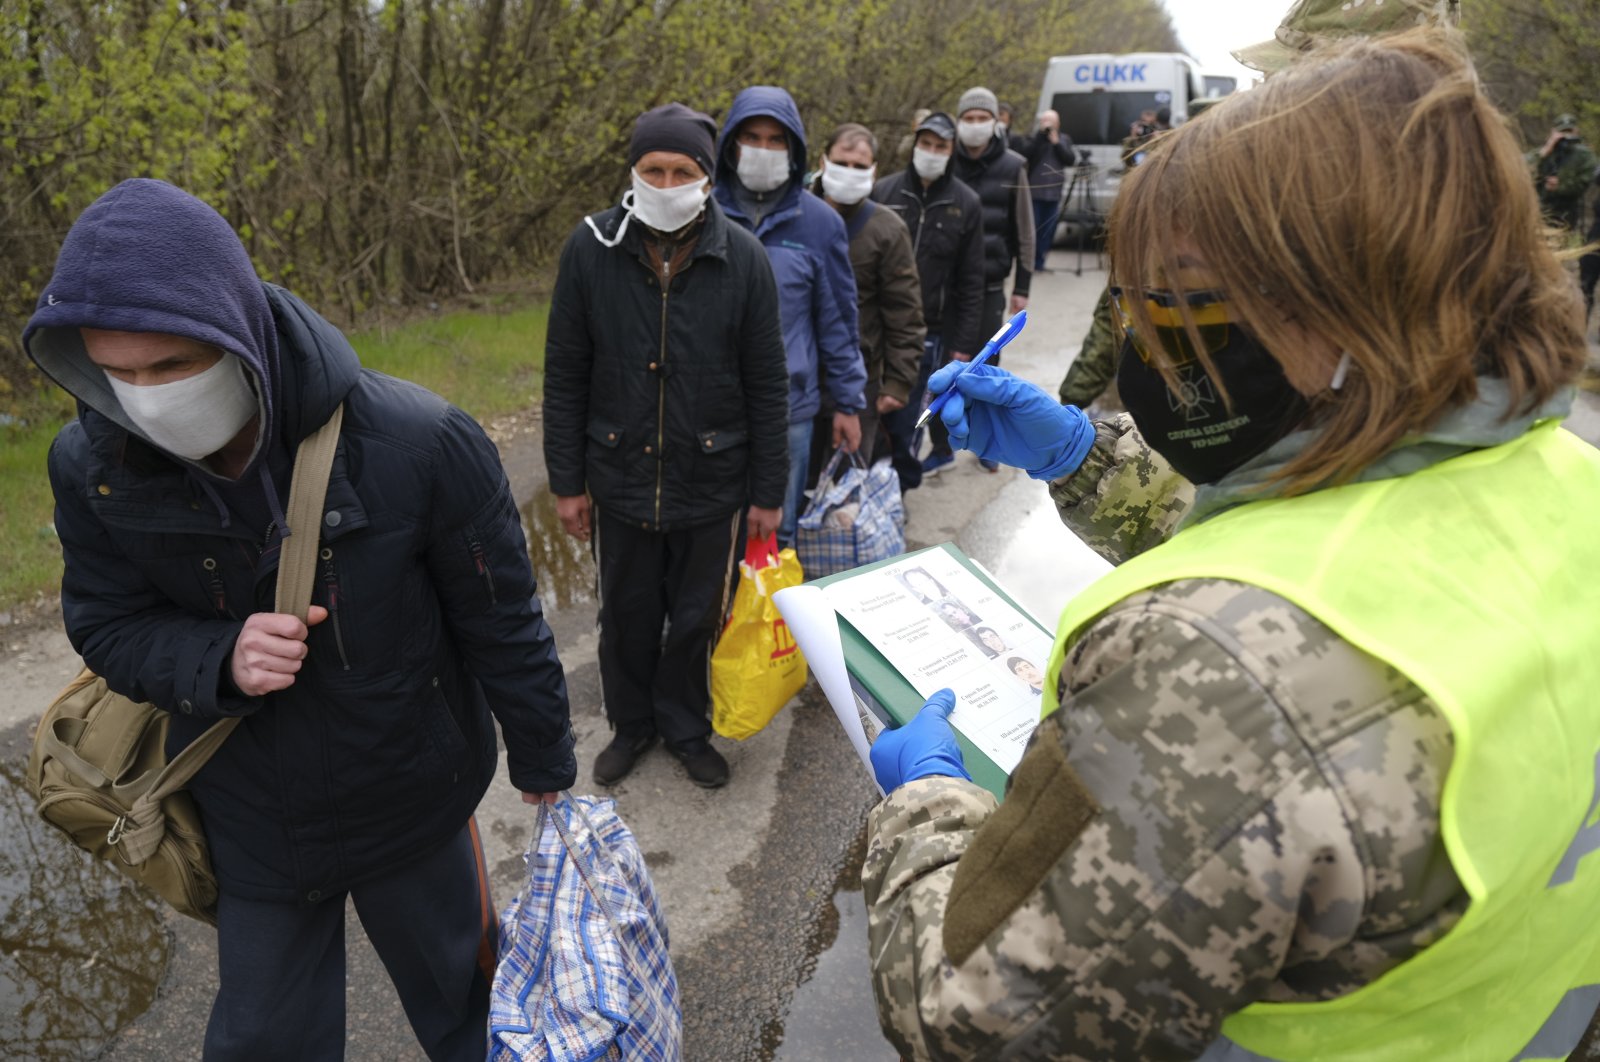 Russia-backed separatists war prisoners wearing masks to protect against coronavirus walk during a prisoner exchange, near Gorlivka, Donetsk region, eastern Ukraine, April 16, 2020. (AP Photo)